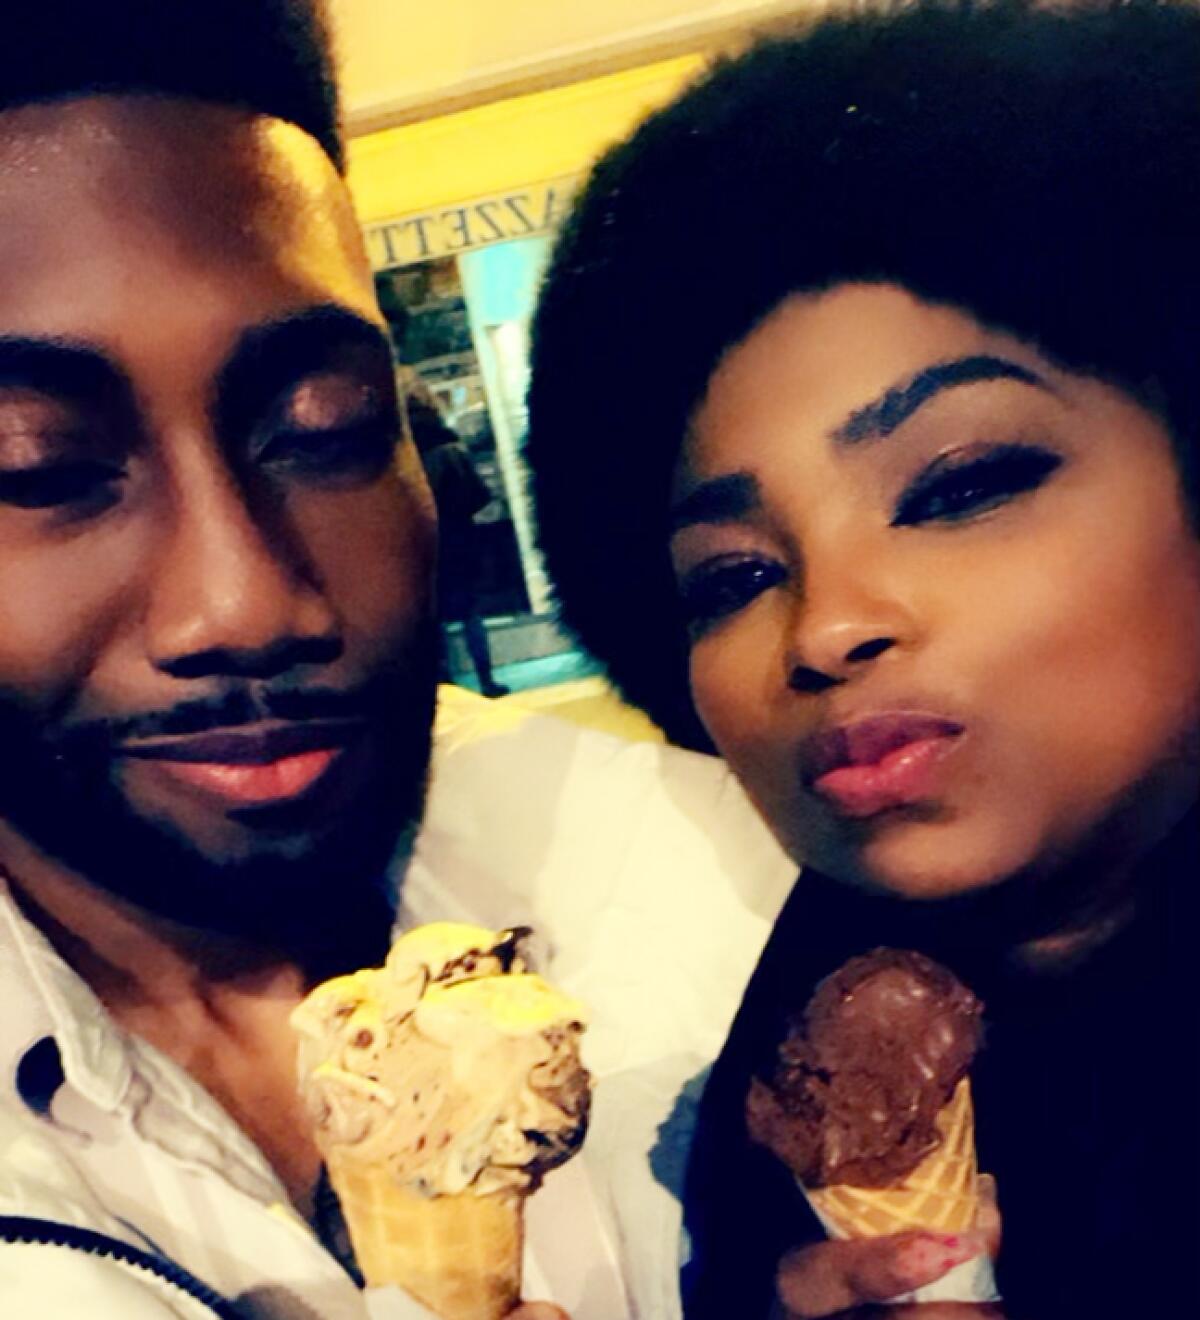 A man and a woman each hold an ice cream cone.